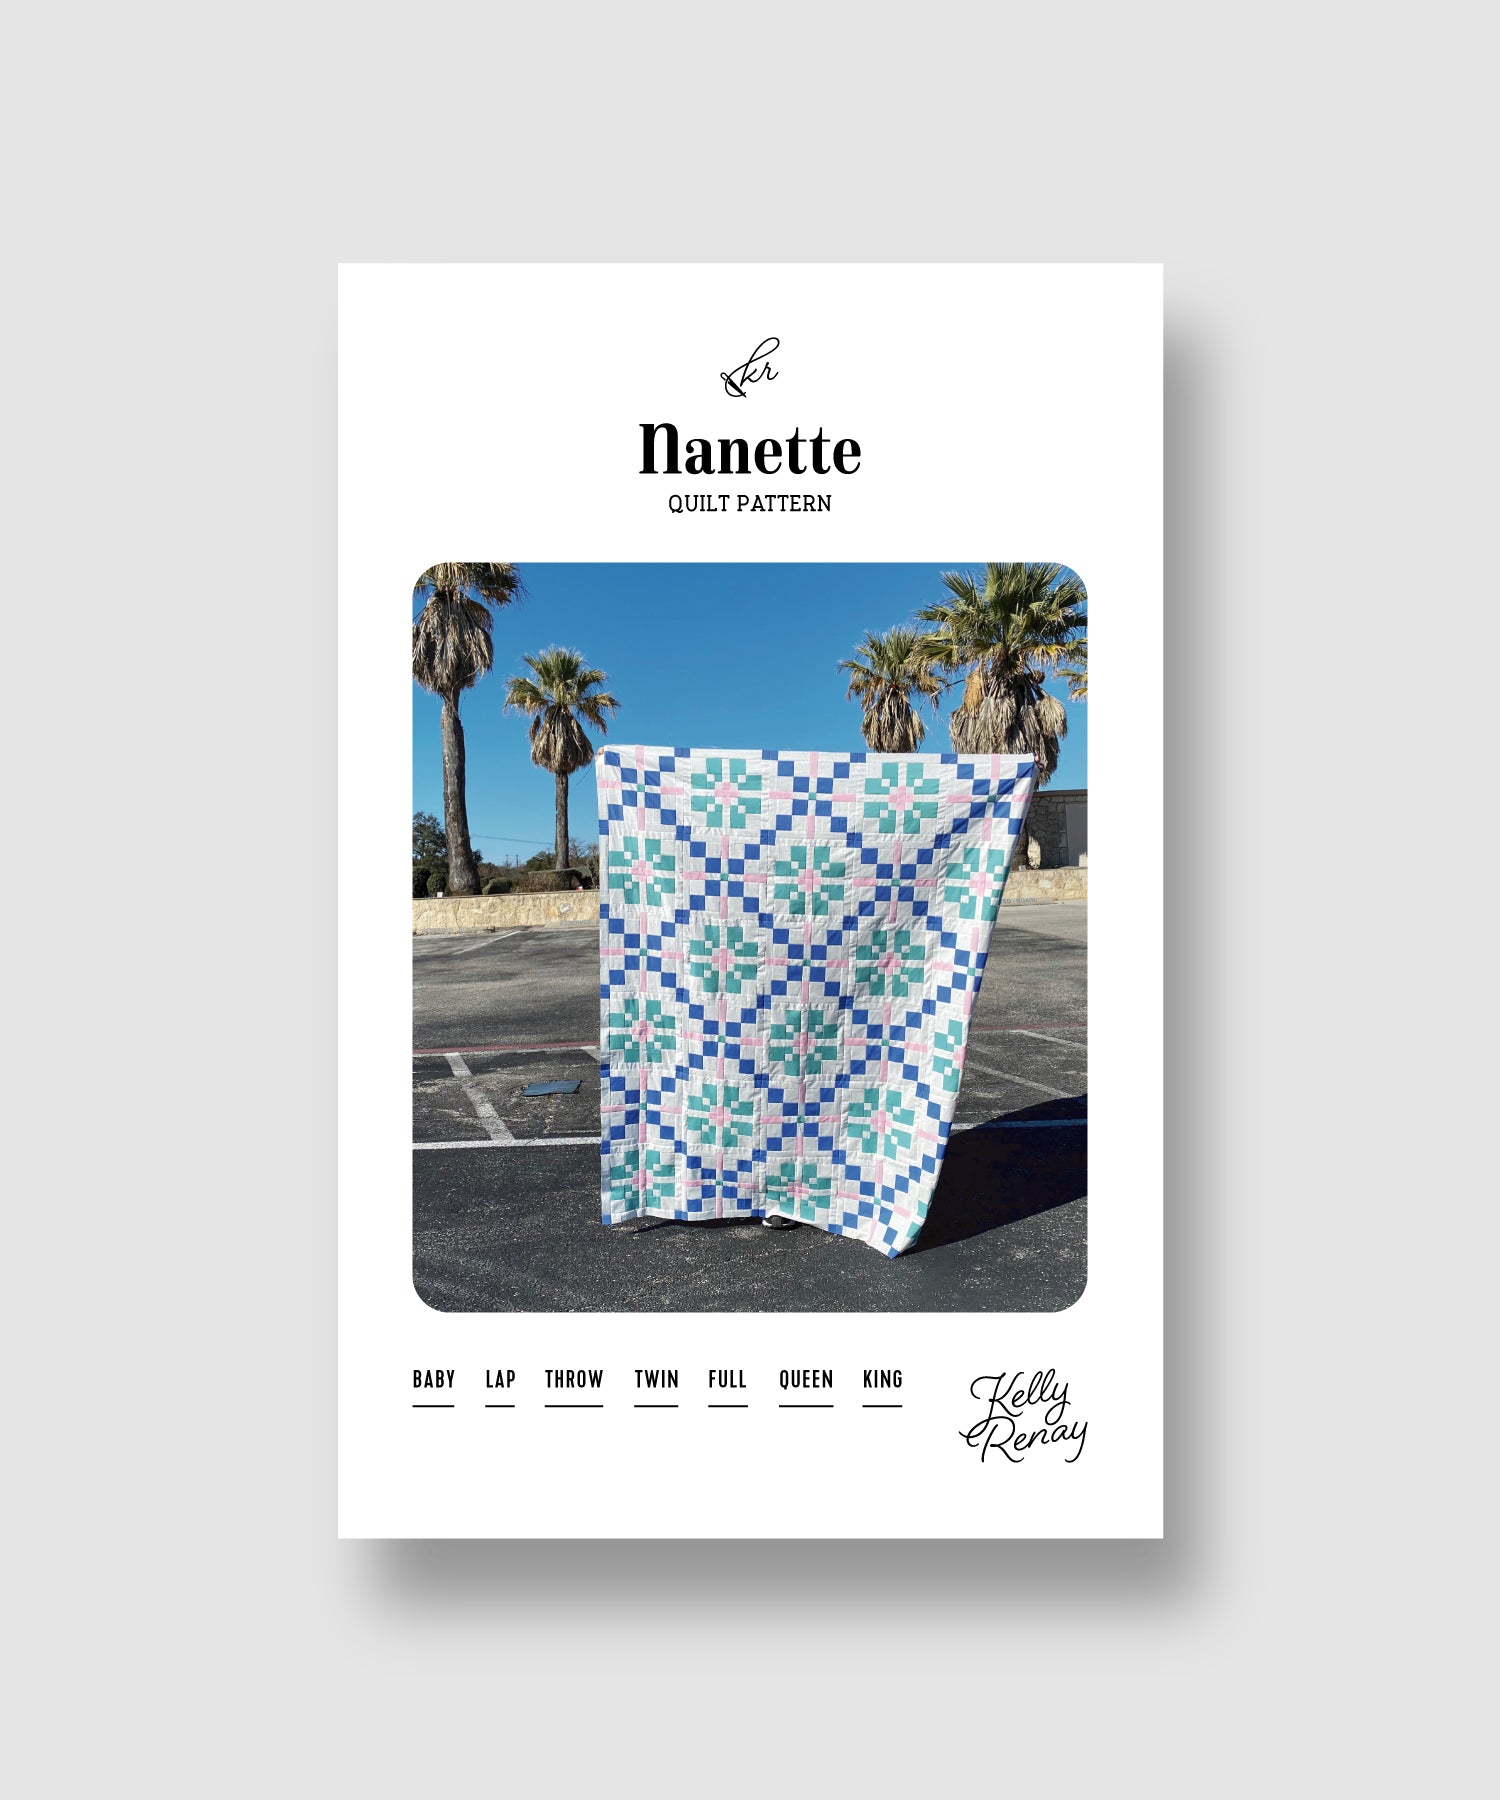 Nanette Quilt Pattern - booklet cover